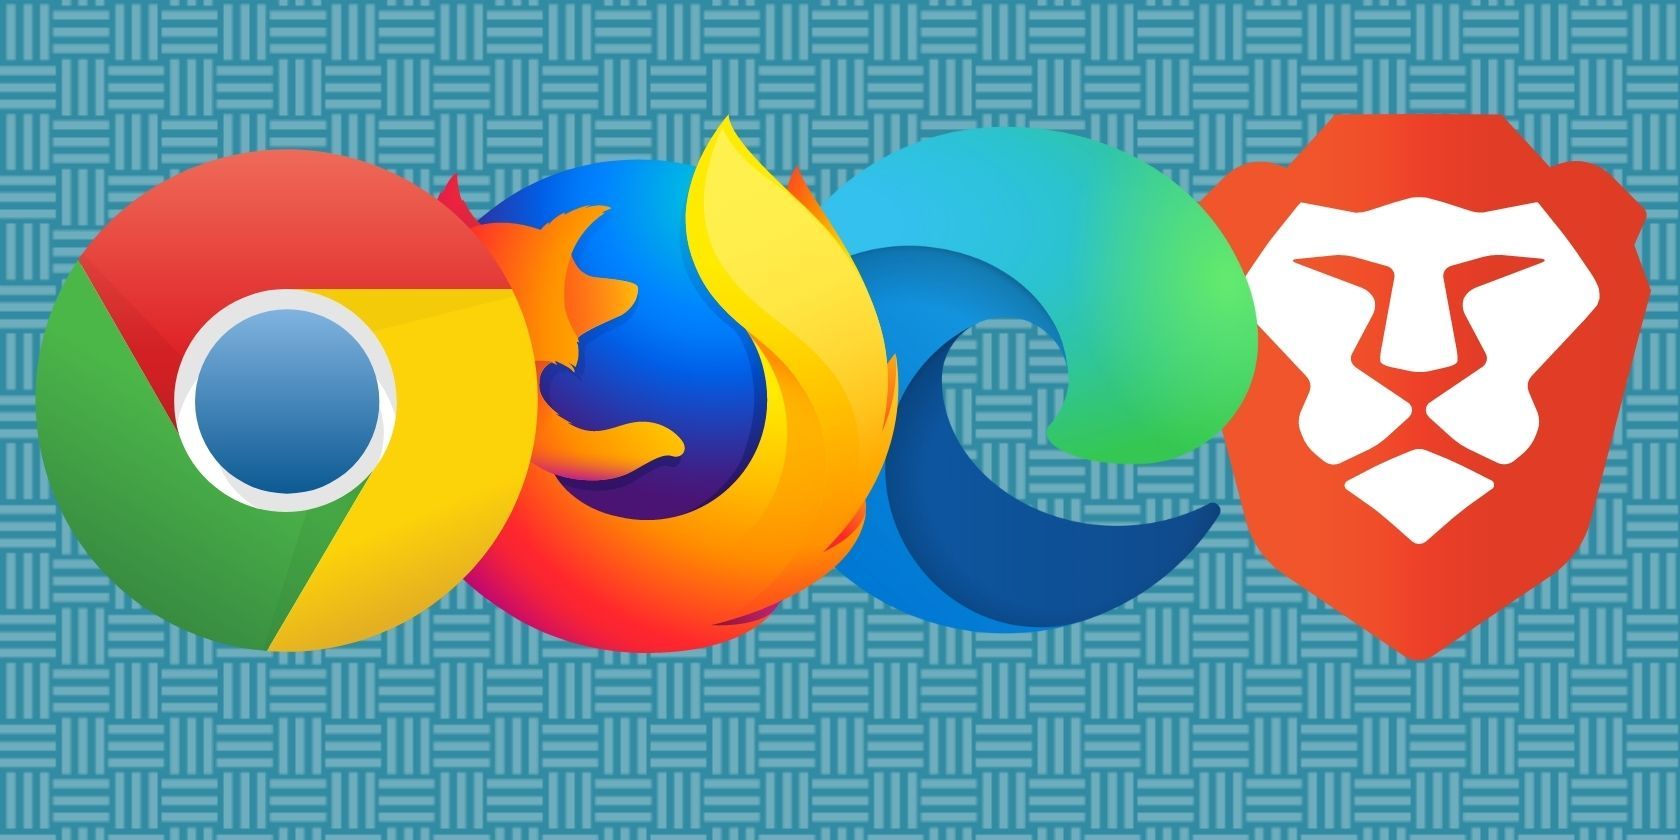 Chrome Firefox Edge and Brave logos